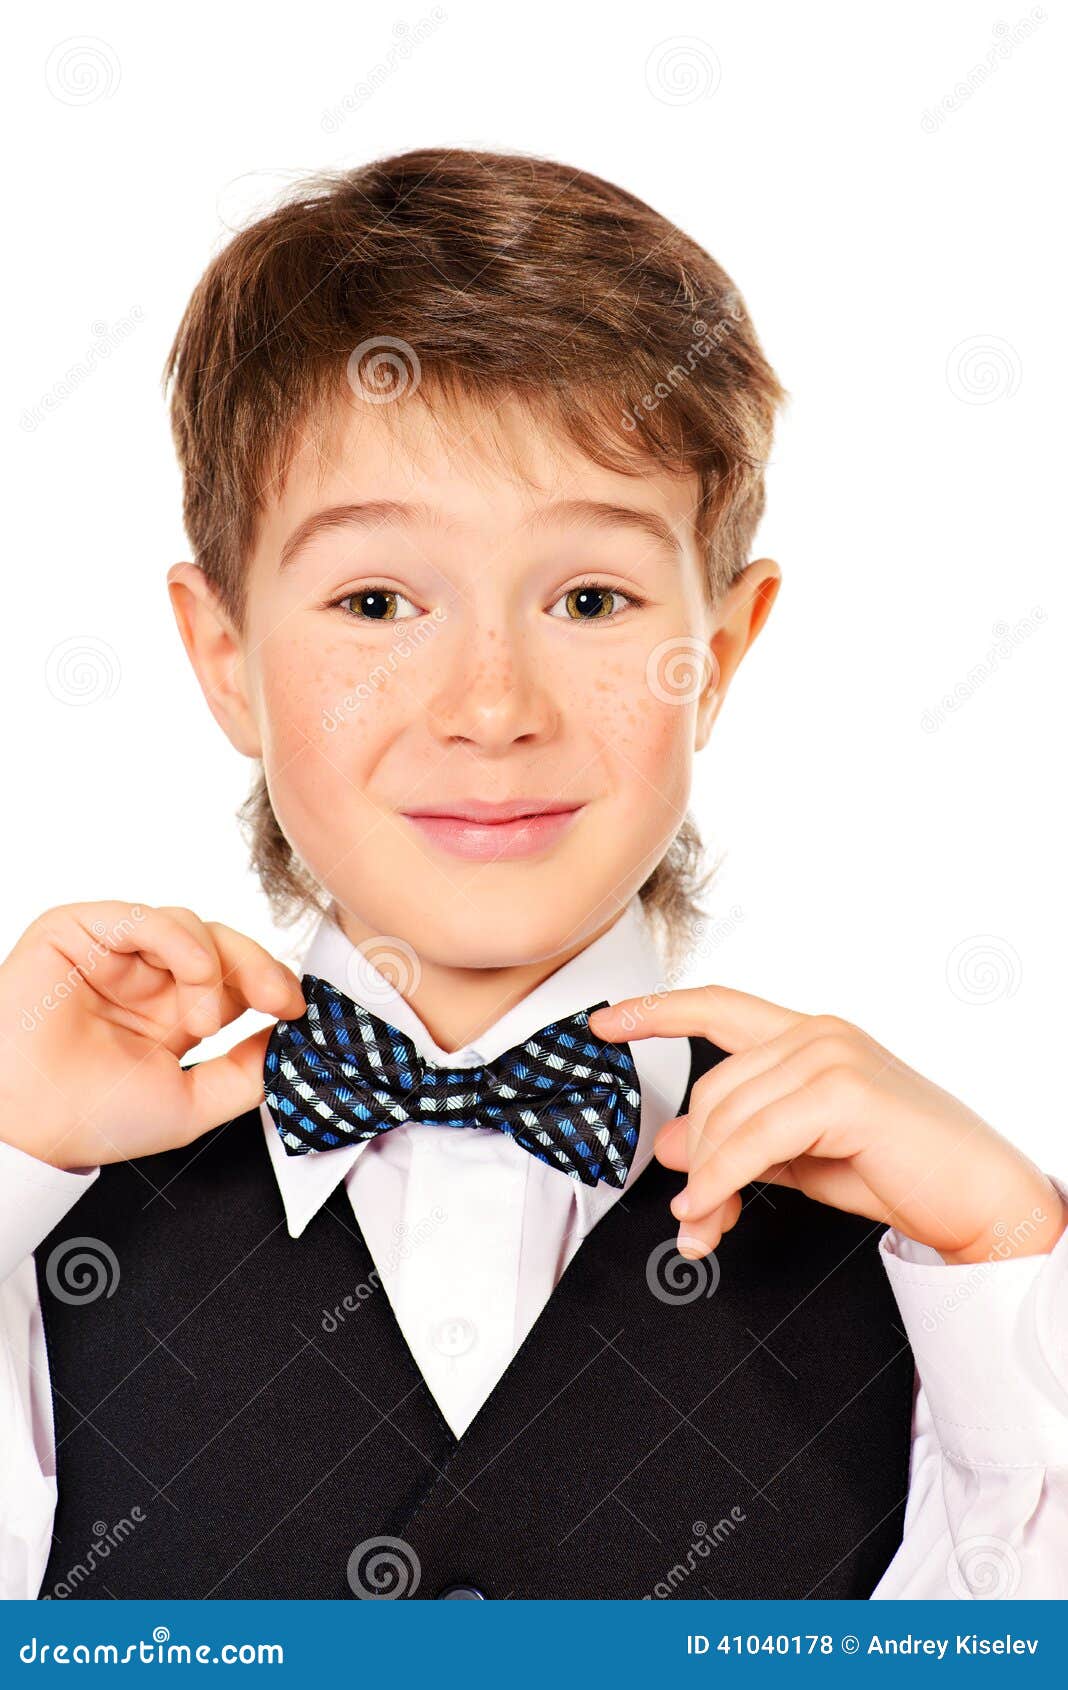 Elegant kid stock photo. Image of shirt, caucasian, academic - 41040178